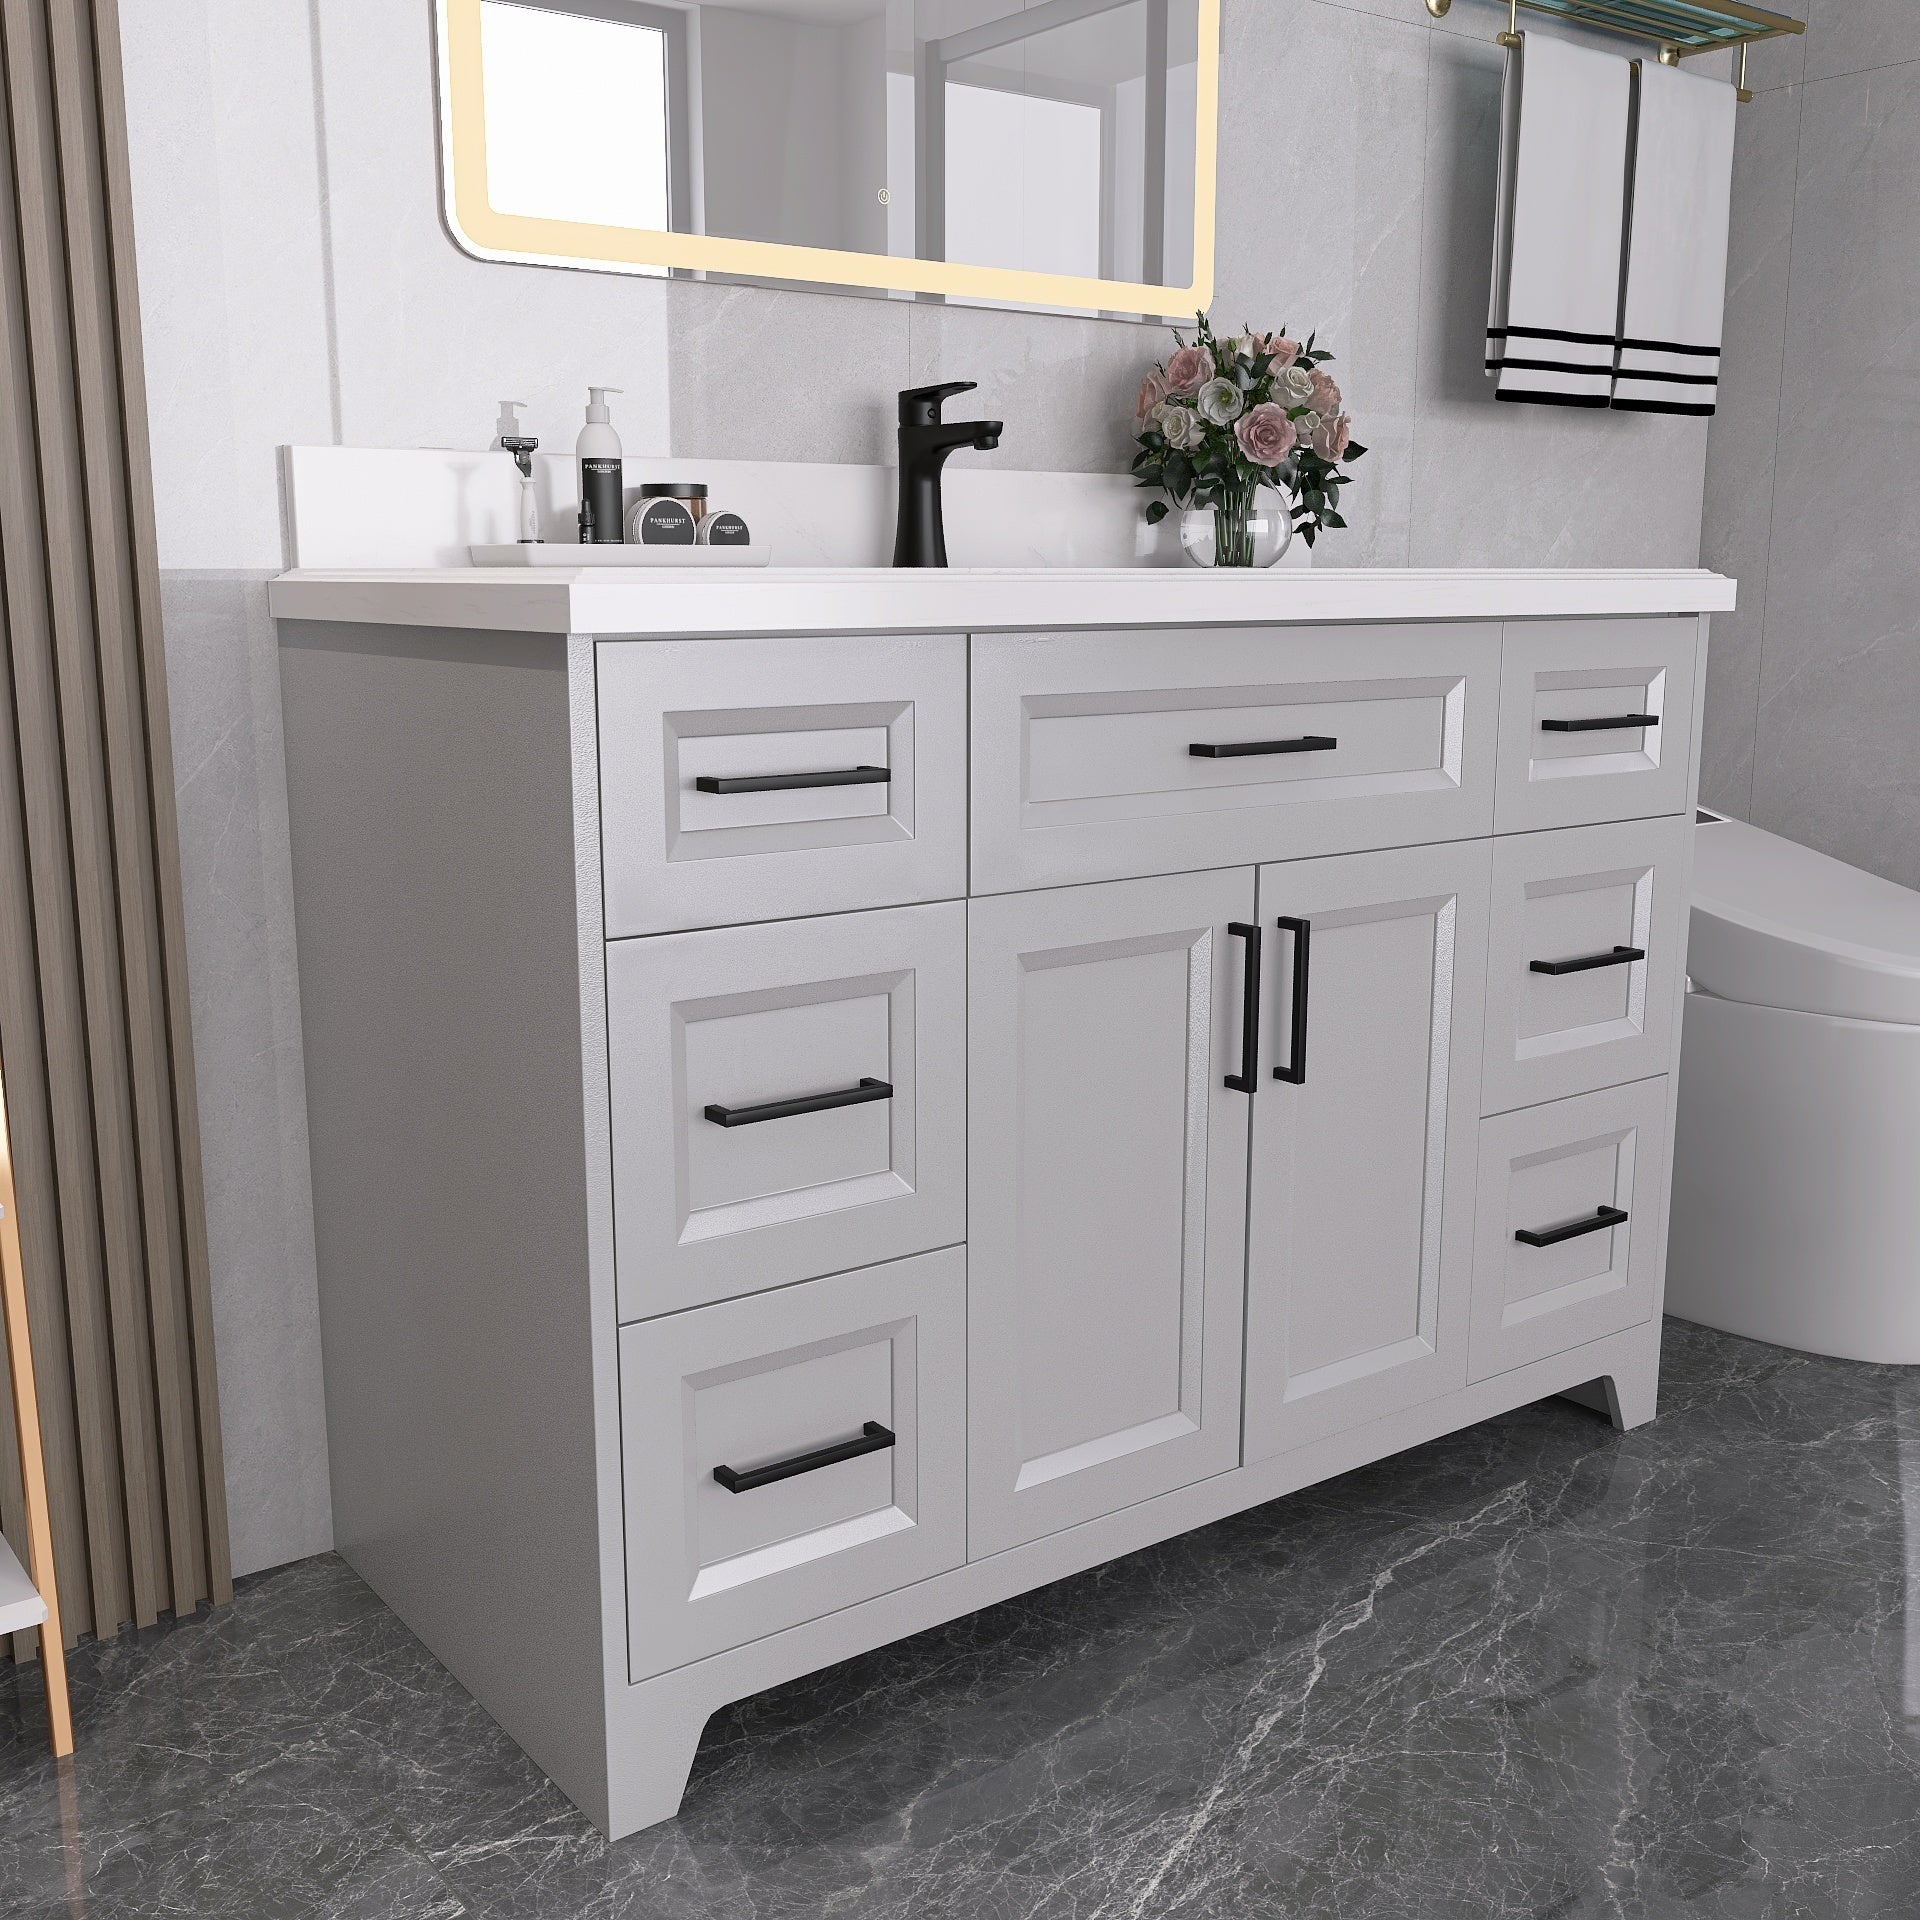 48" Bathroom Vanity With Sink Combo, Modern